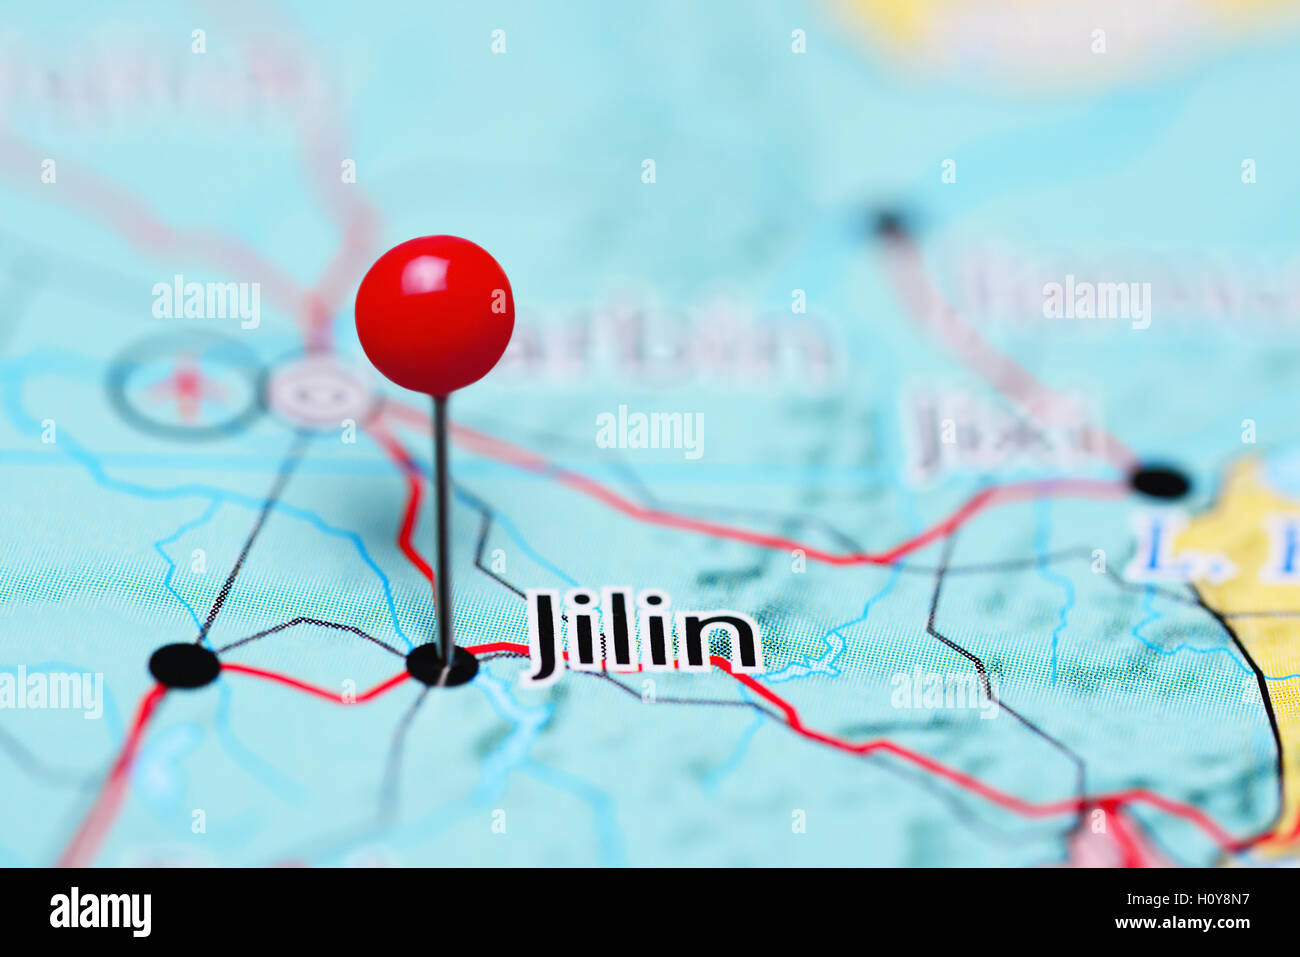 Jilin pinned on a map of China Stock Photo